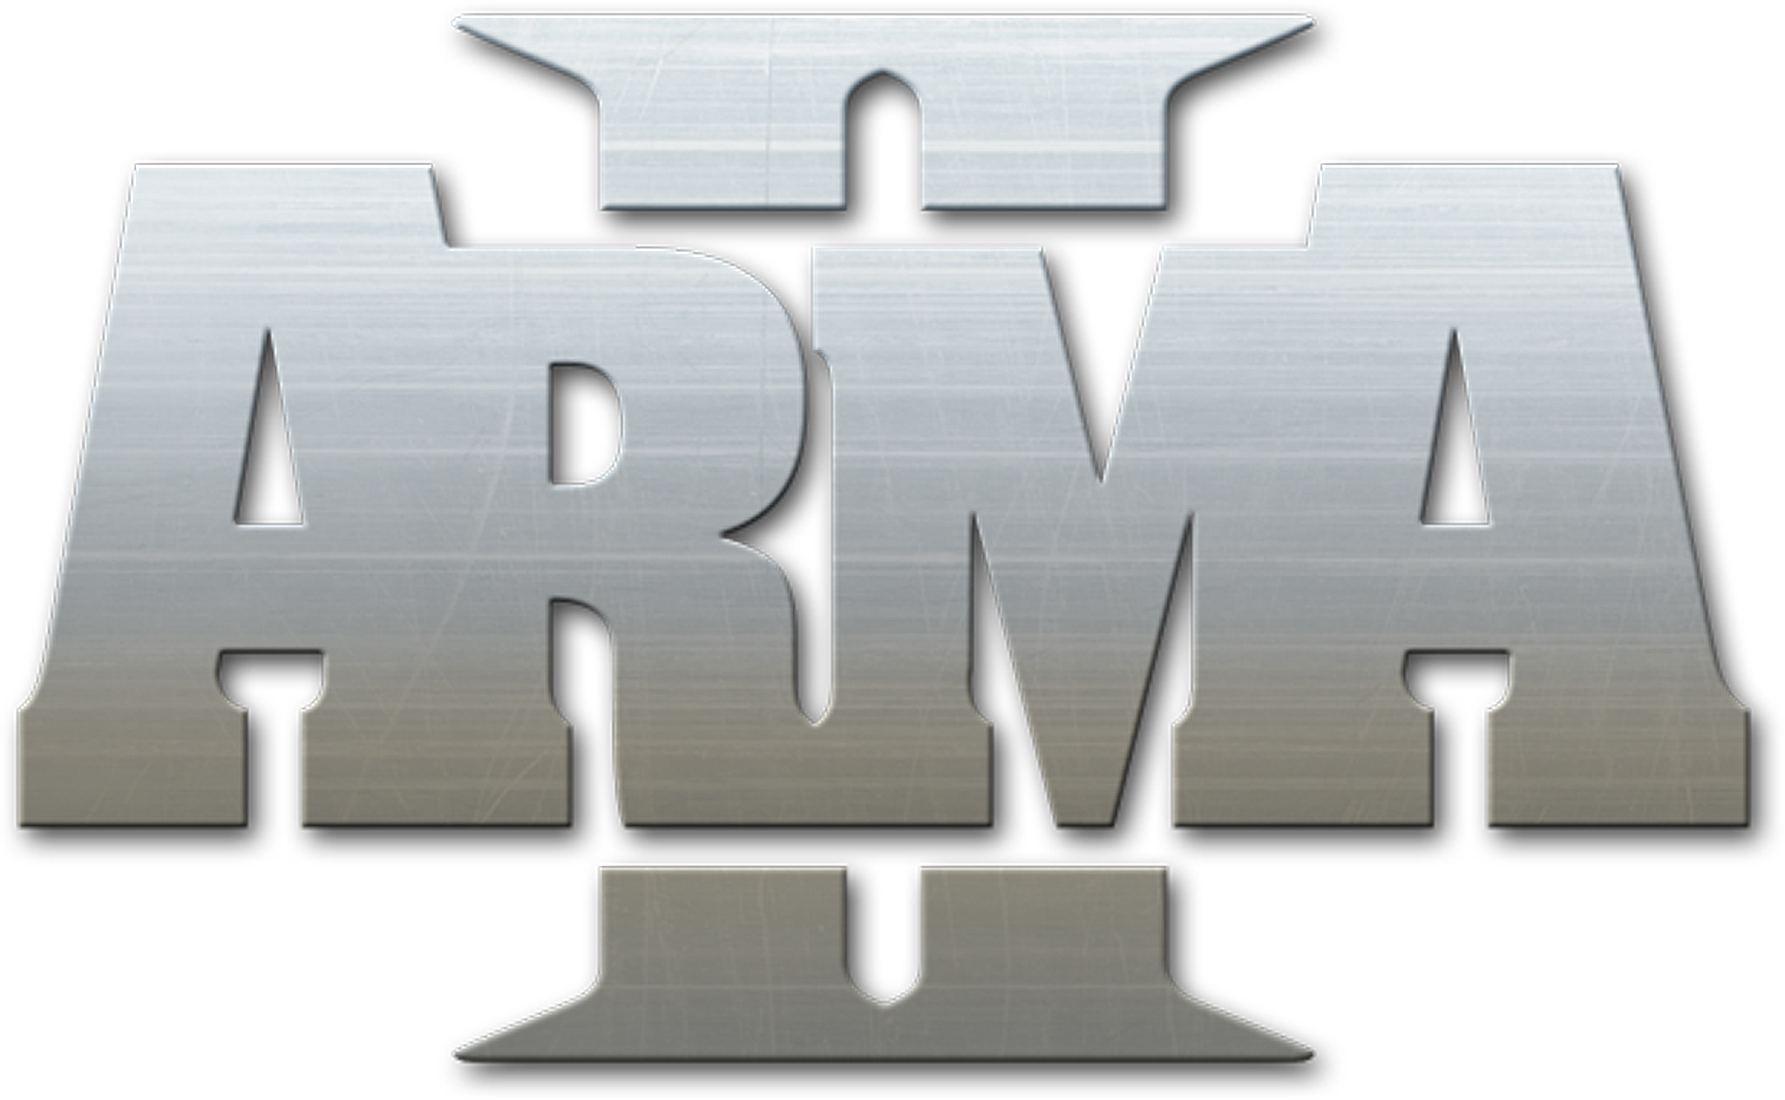 ARMA 3 logo PNG